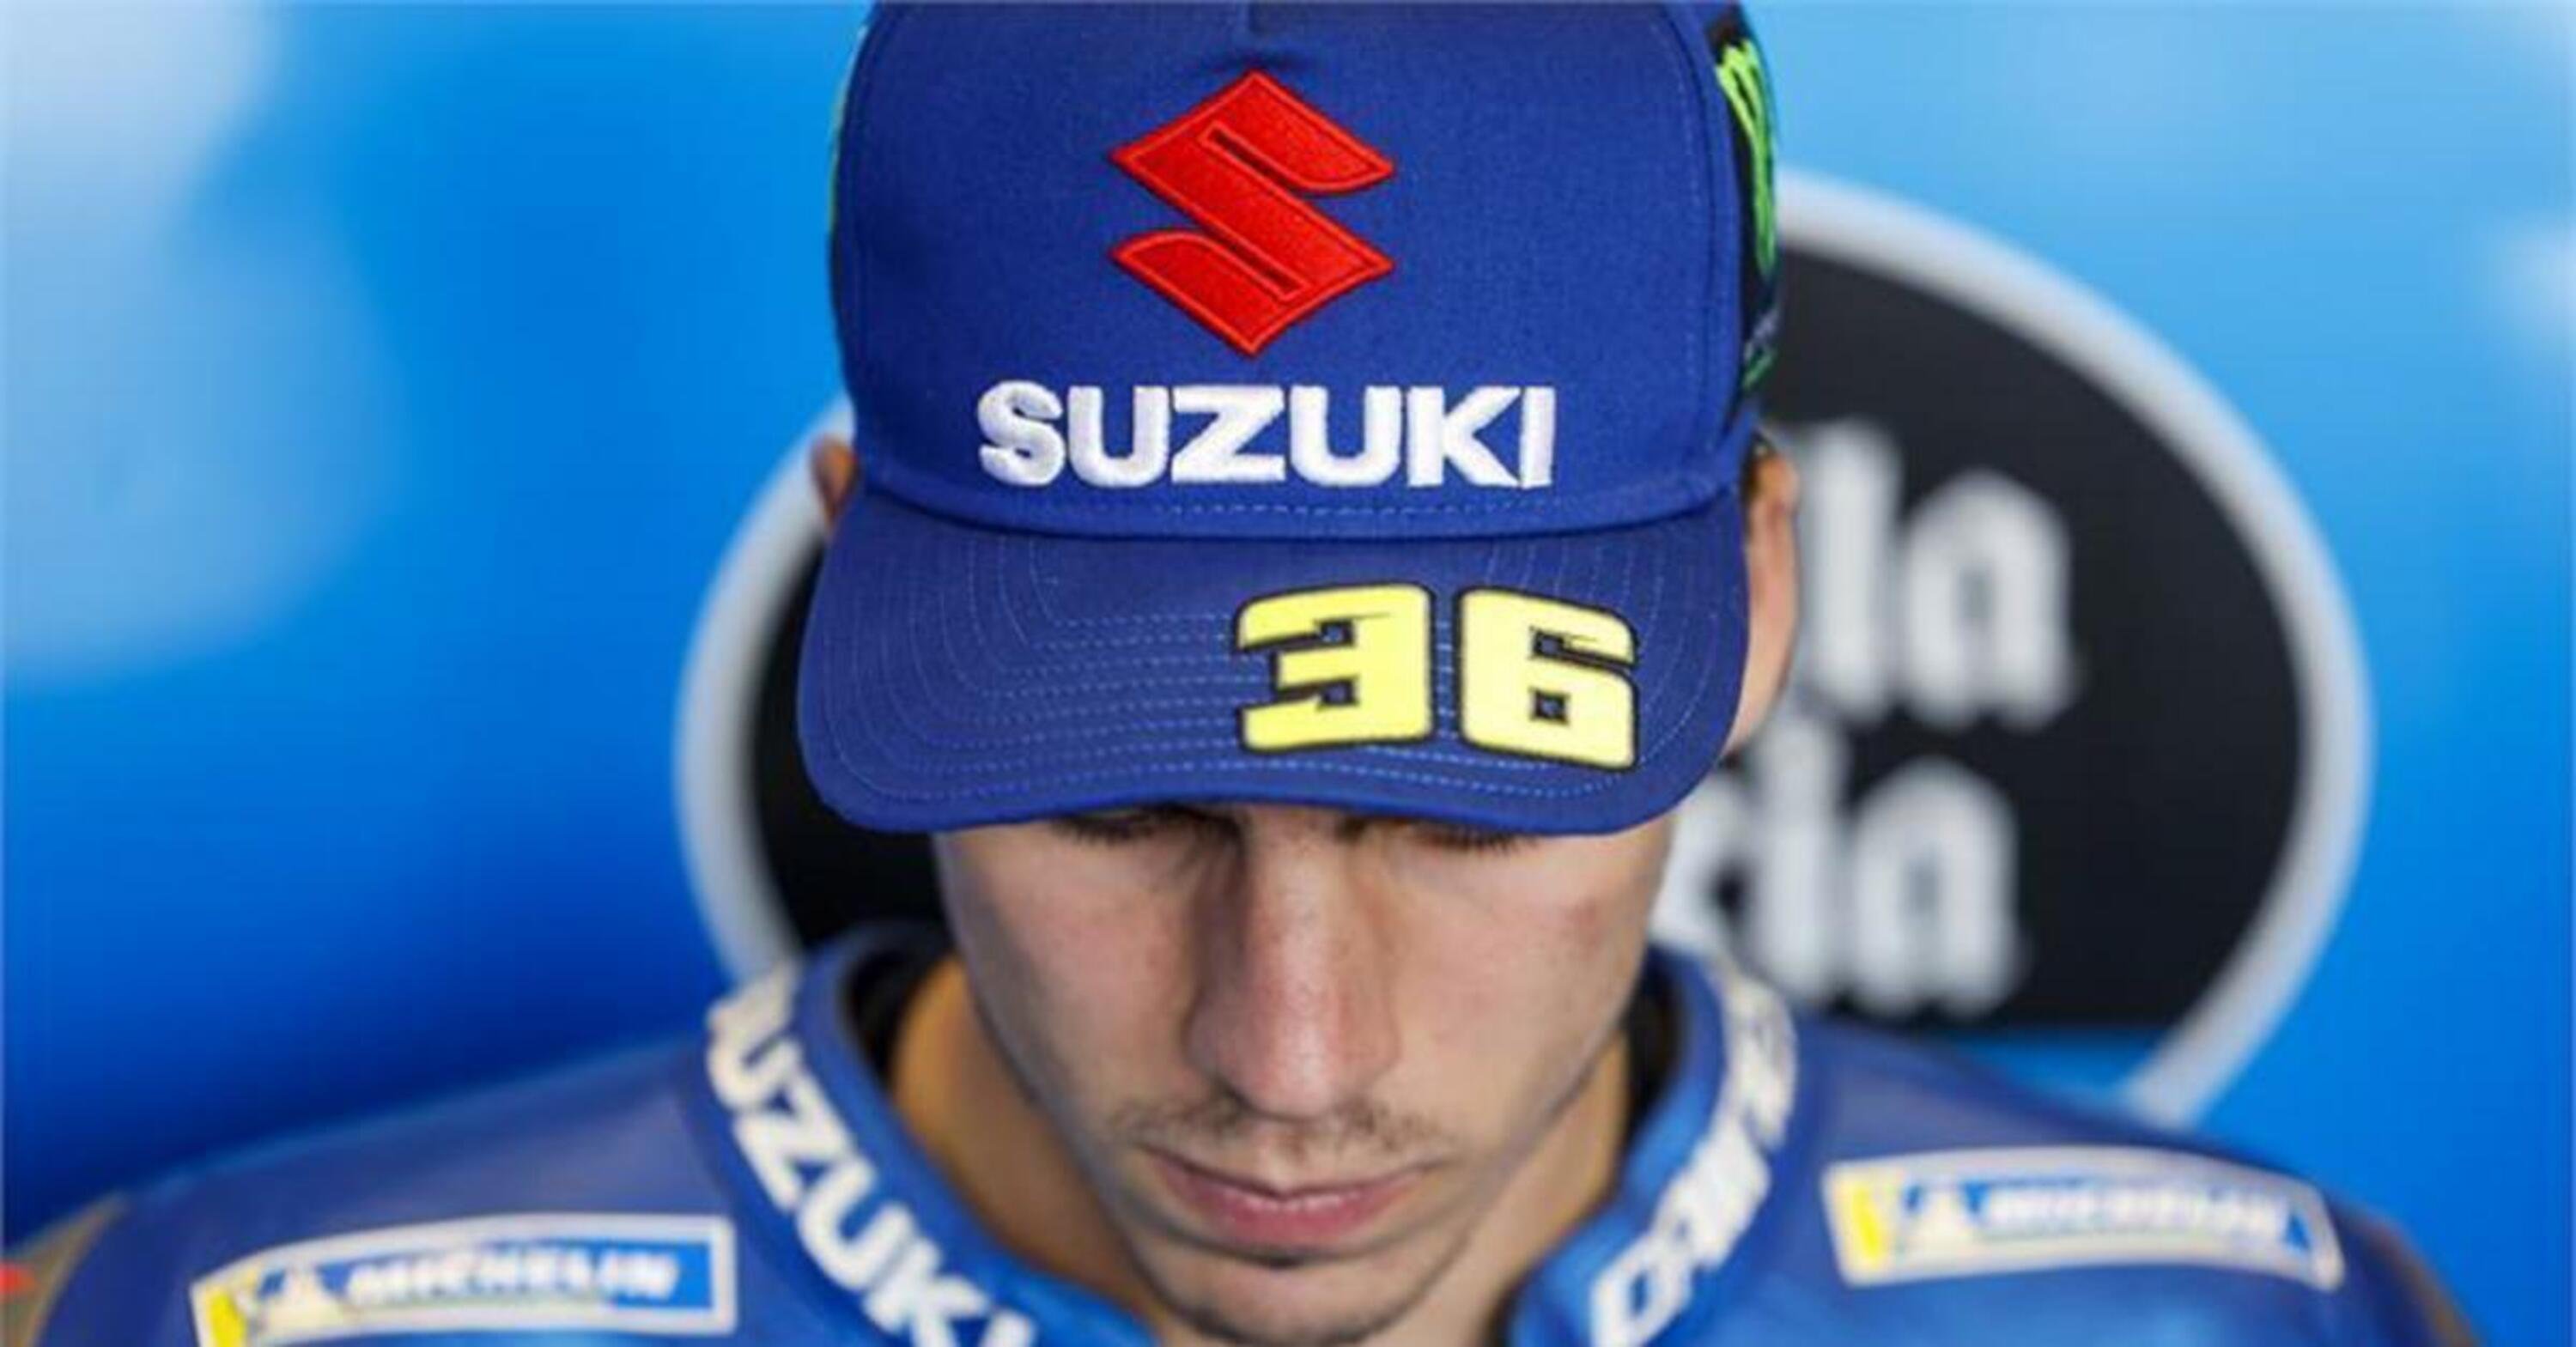 MotoGP 2022. Addio alla MotoGP, finalmente parla Suzuki